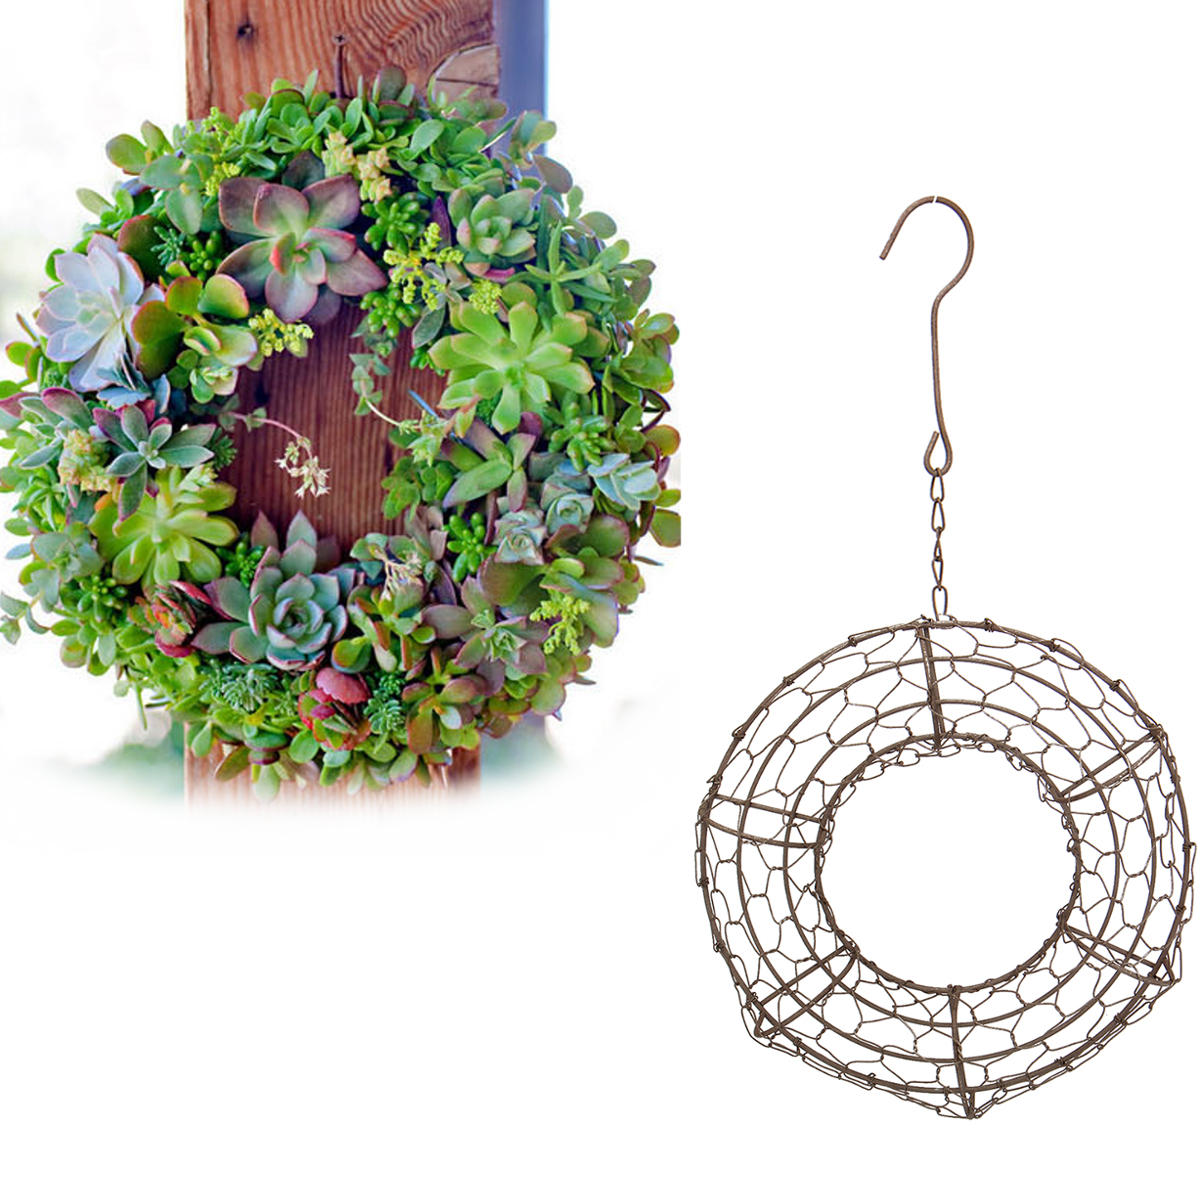 

Gardening Round Iron Hanging Planter Pot Flower Pot Wire Wreath For Succulent Plant Decorations